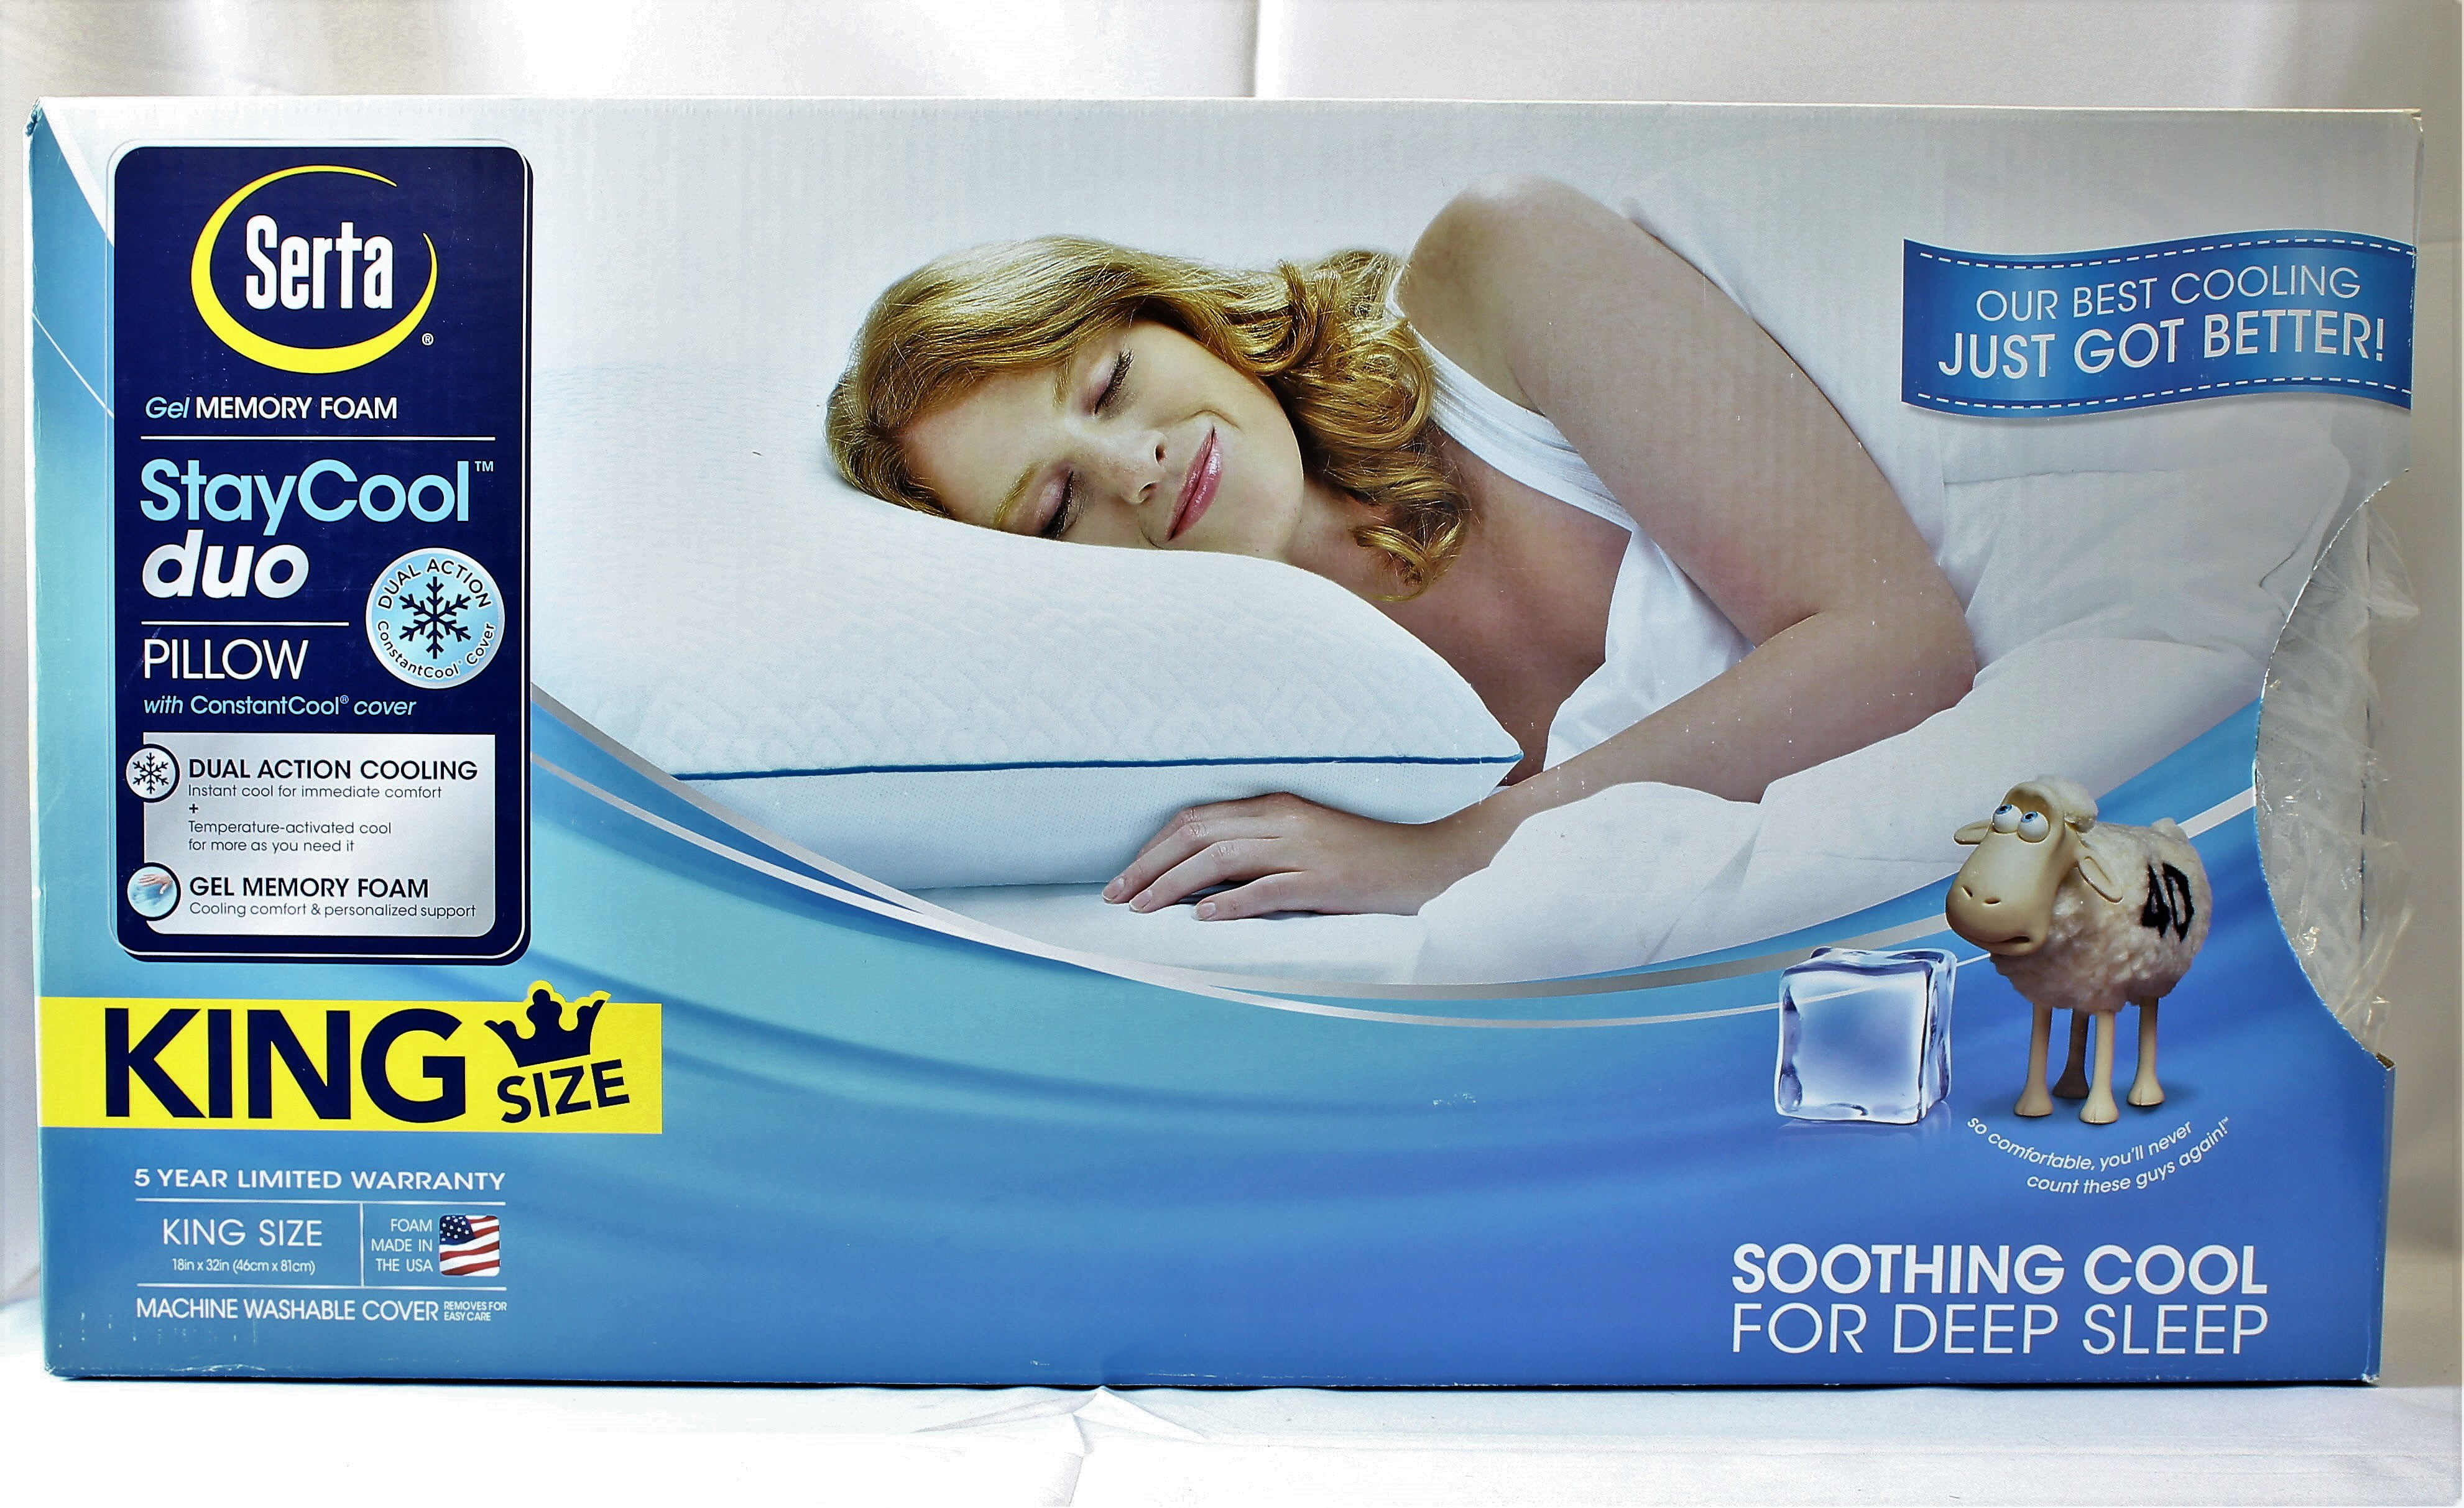 Serta StayCool Duo Pillow - King Size 